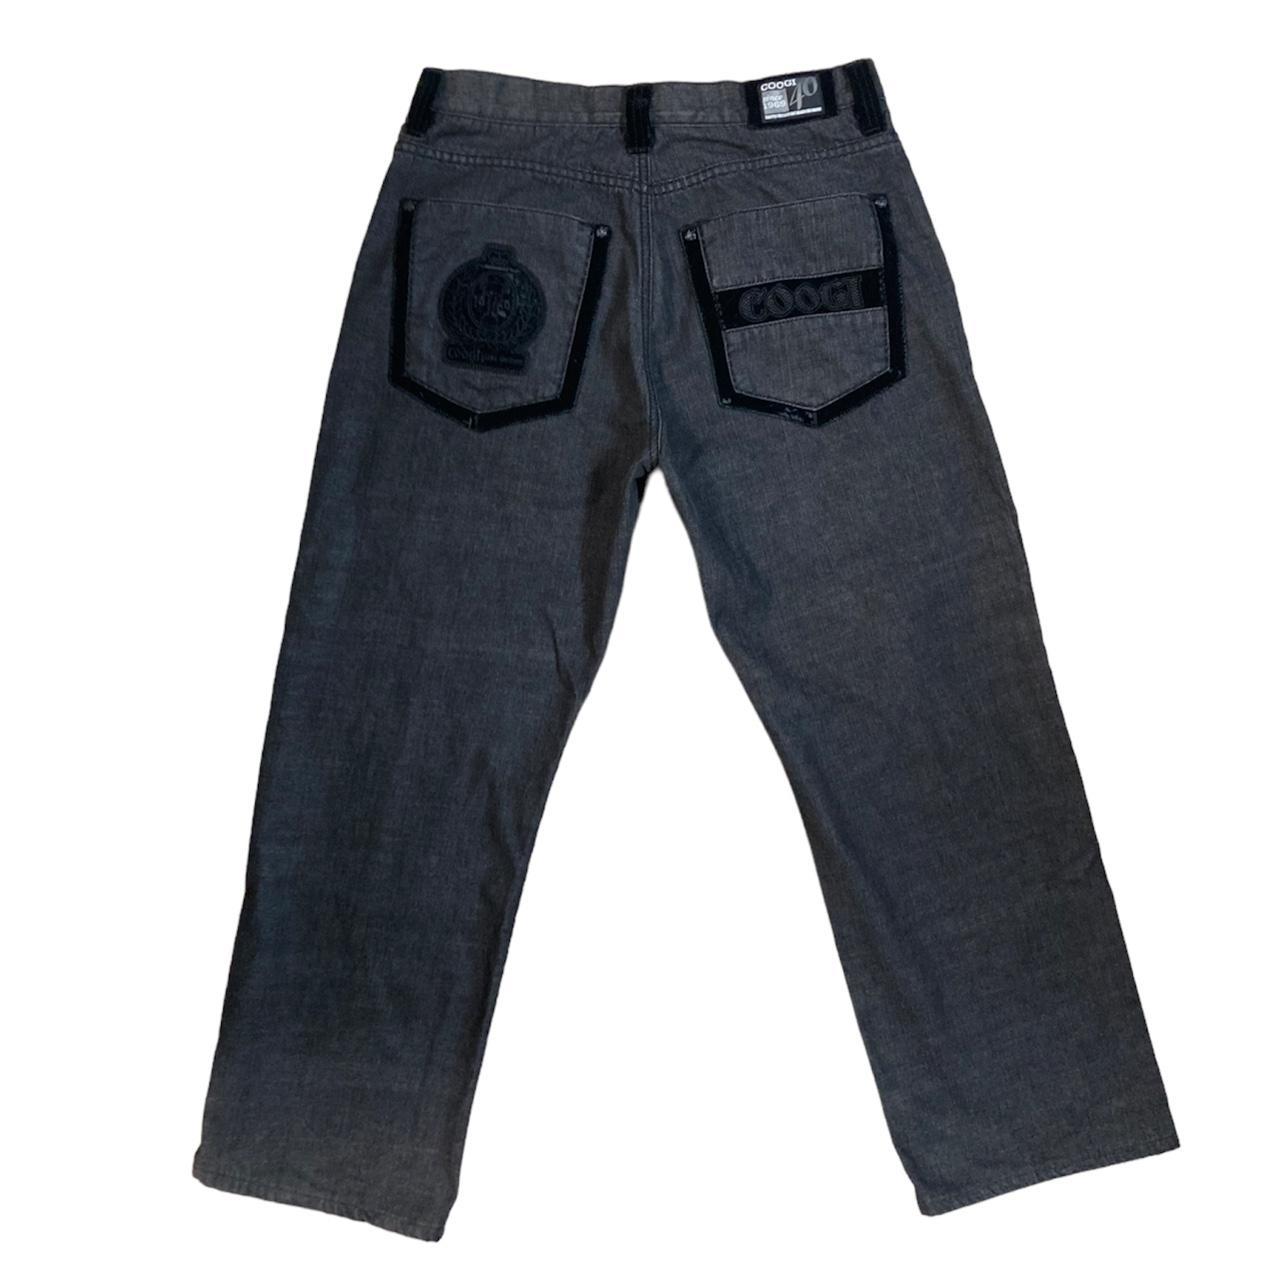 Coogi Men's Black Jeans (2)